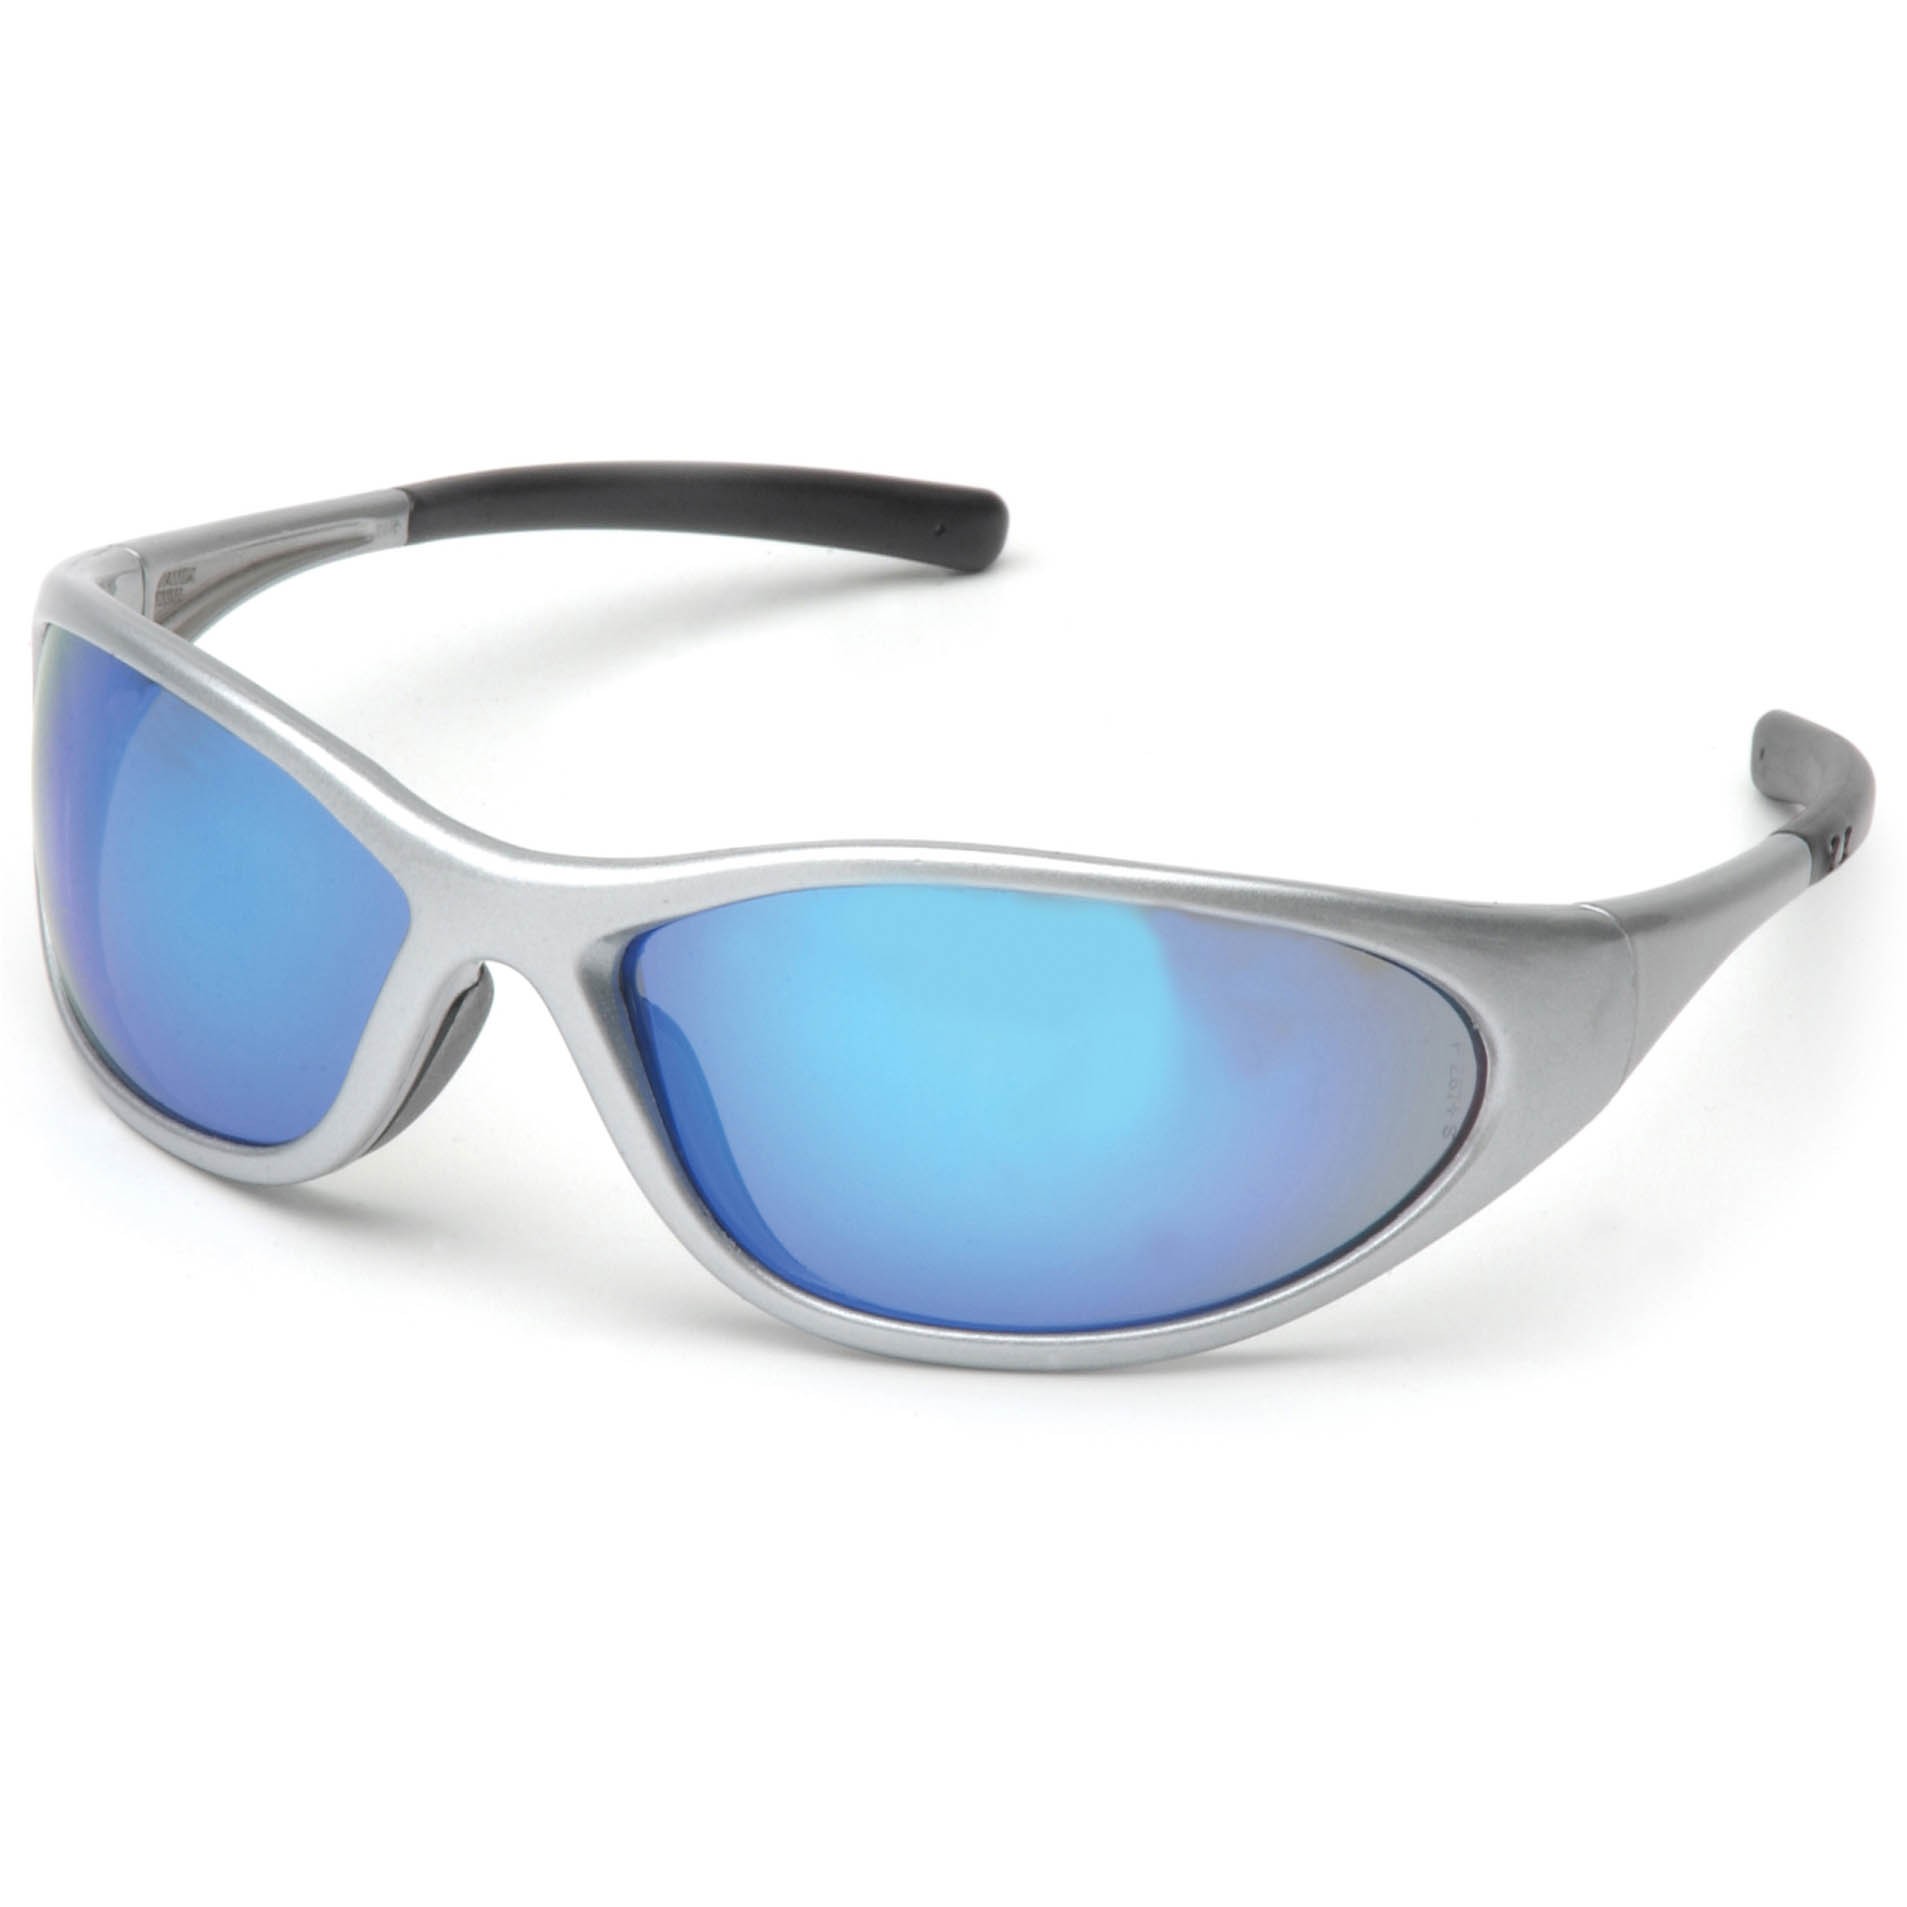 Pyramex SS3365E Zone II Safety Glasses - Silver Frame - Ice Blue